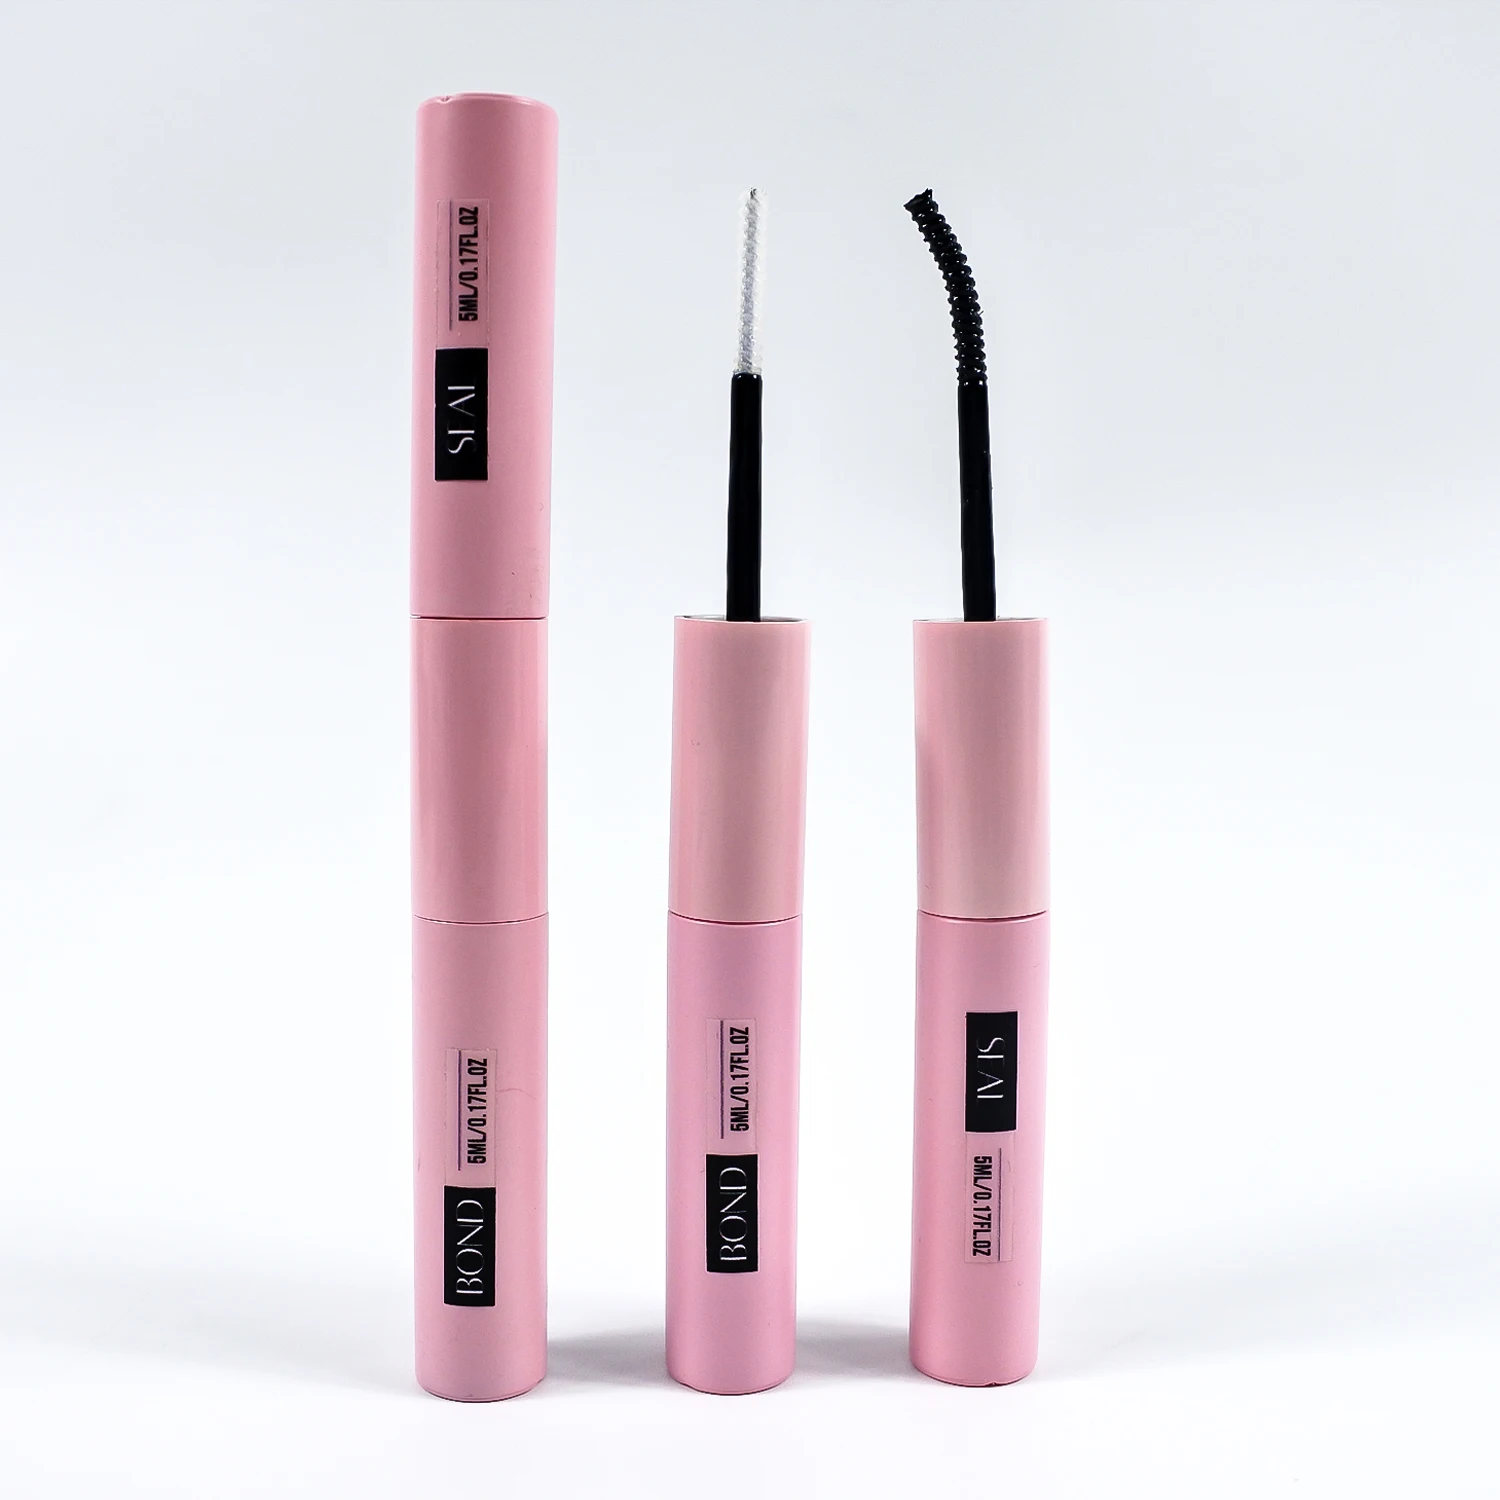 Free Shipping Glue Eyelash Extension Makeup Tool 2 In 1 Bond and Seal Lash Glue Long Lasting adhesives for DIY Lash Clusters